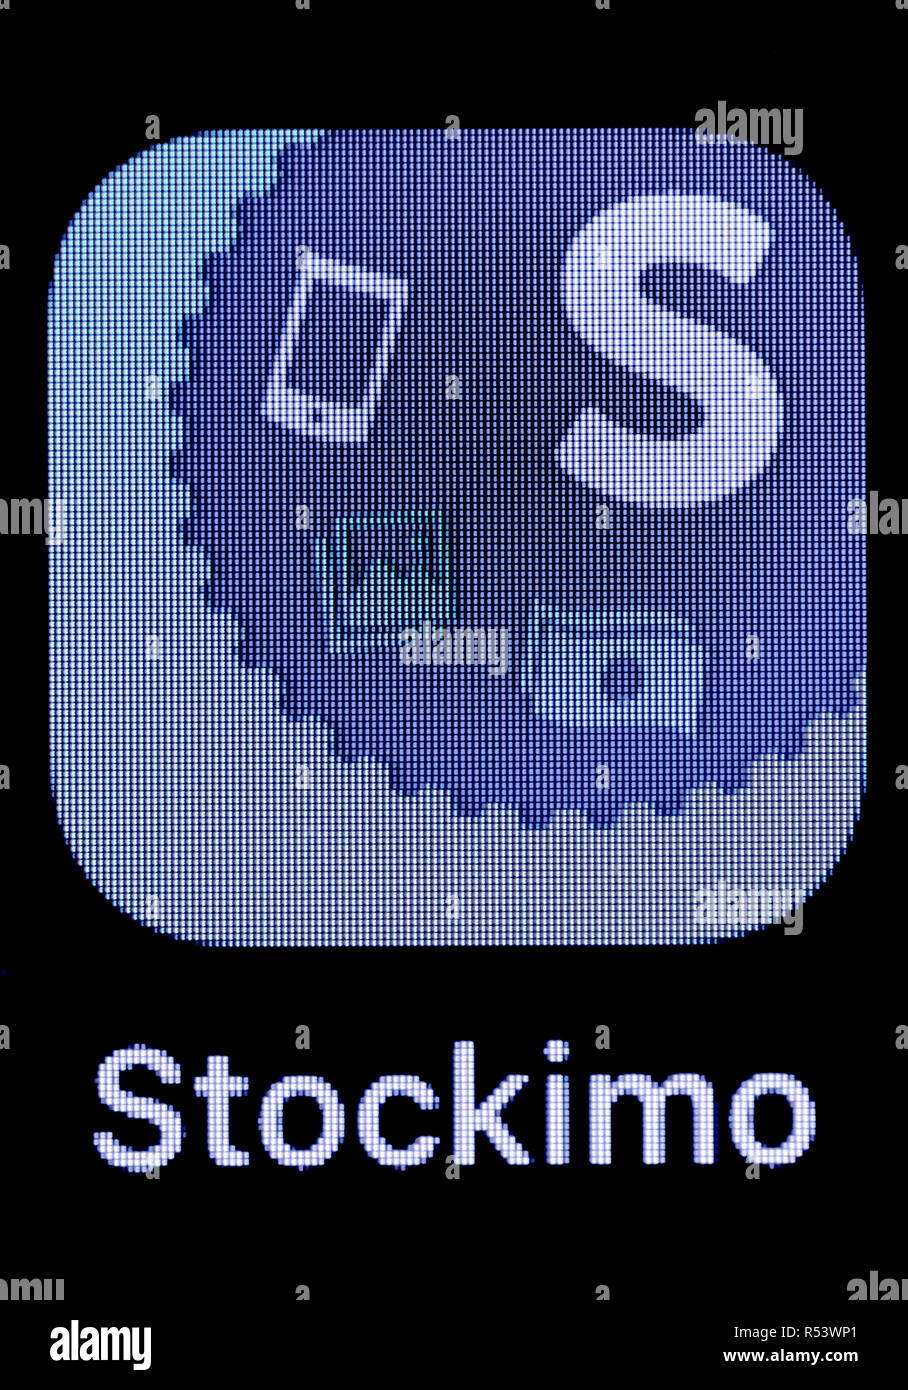 Stockimo logo on an iphone. Stock Photo